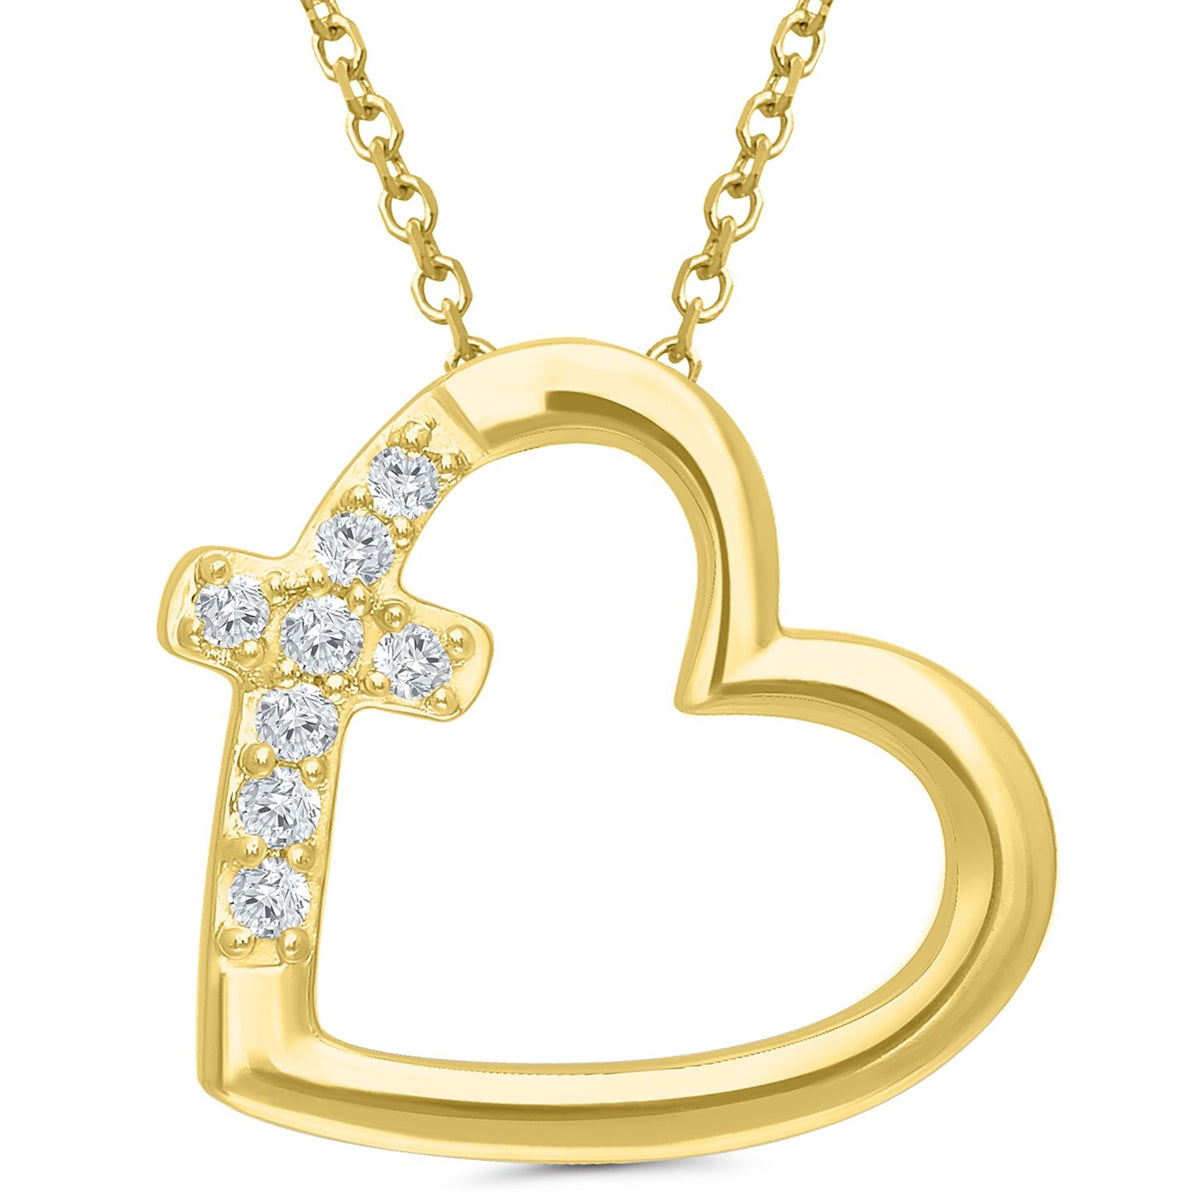 10Kt Yellow Gold Heart With Cross Pendant 0.05cttw Natural Diamonds